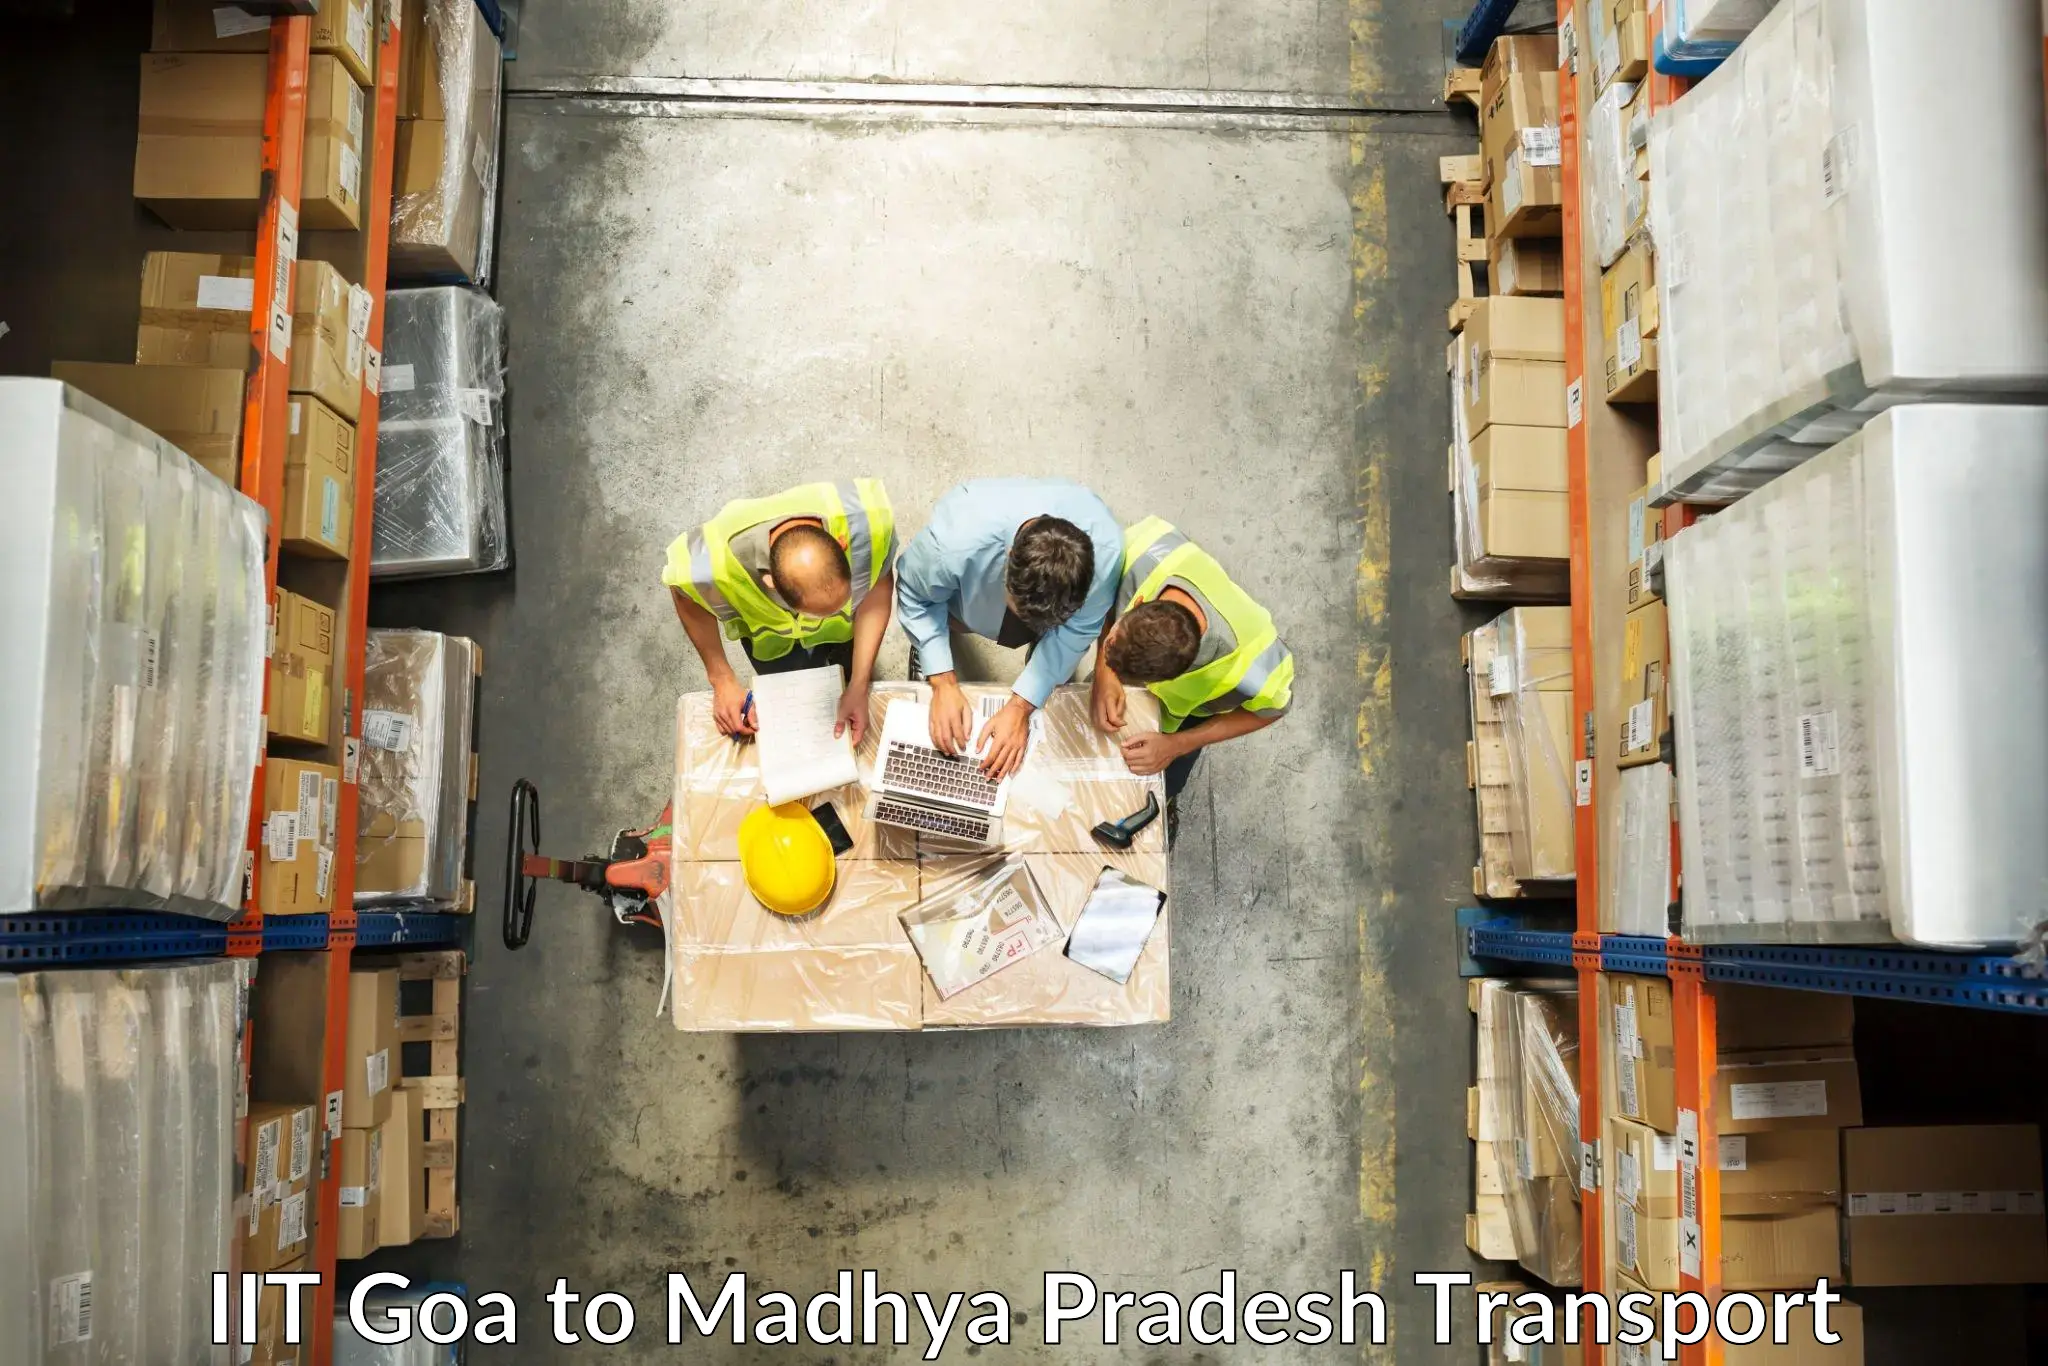 Online transport service IIT Goa to Mandla